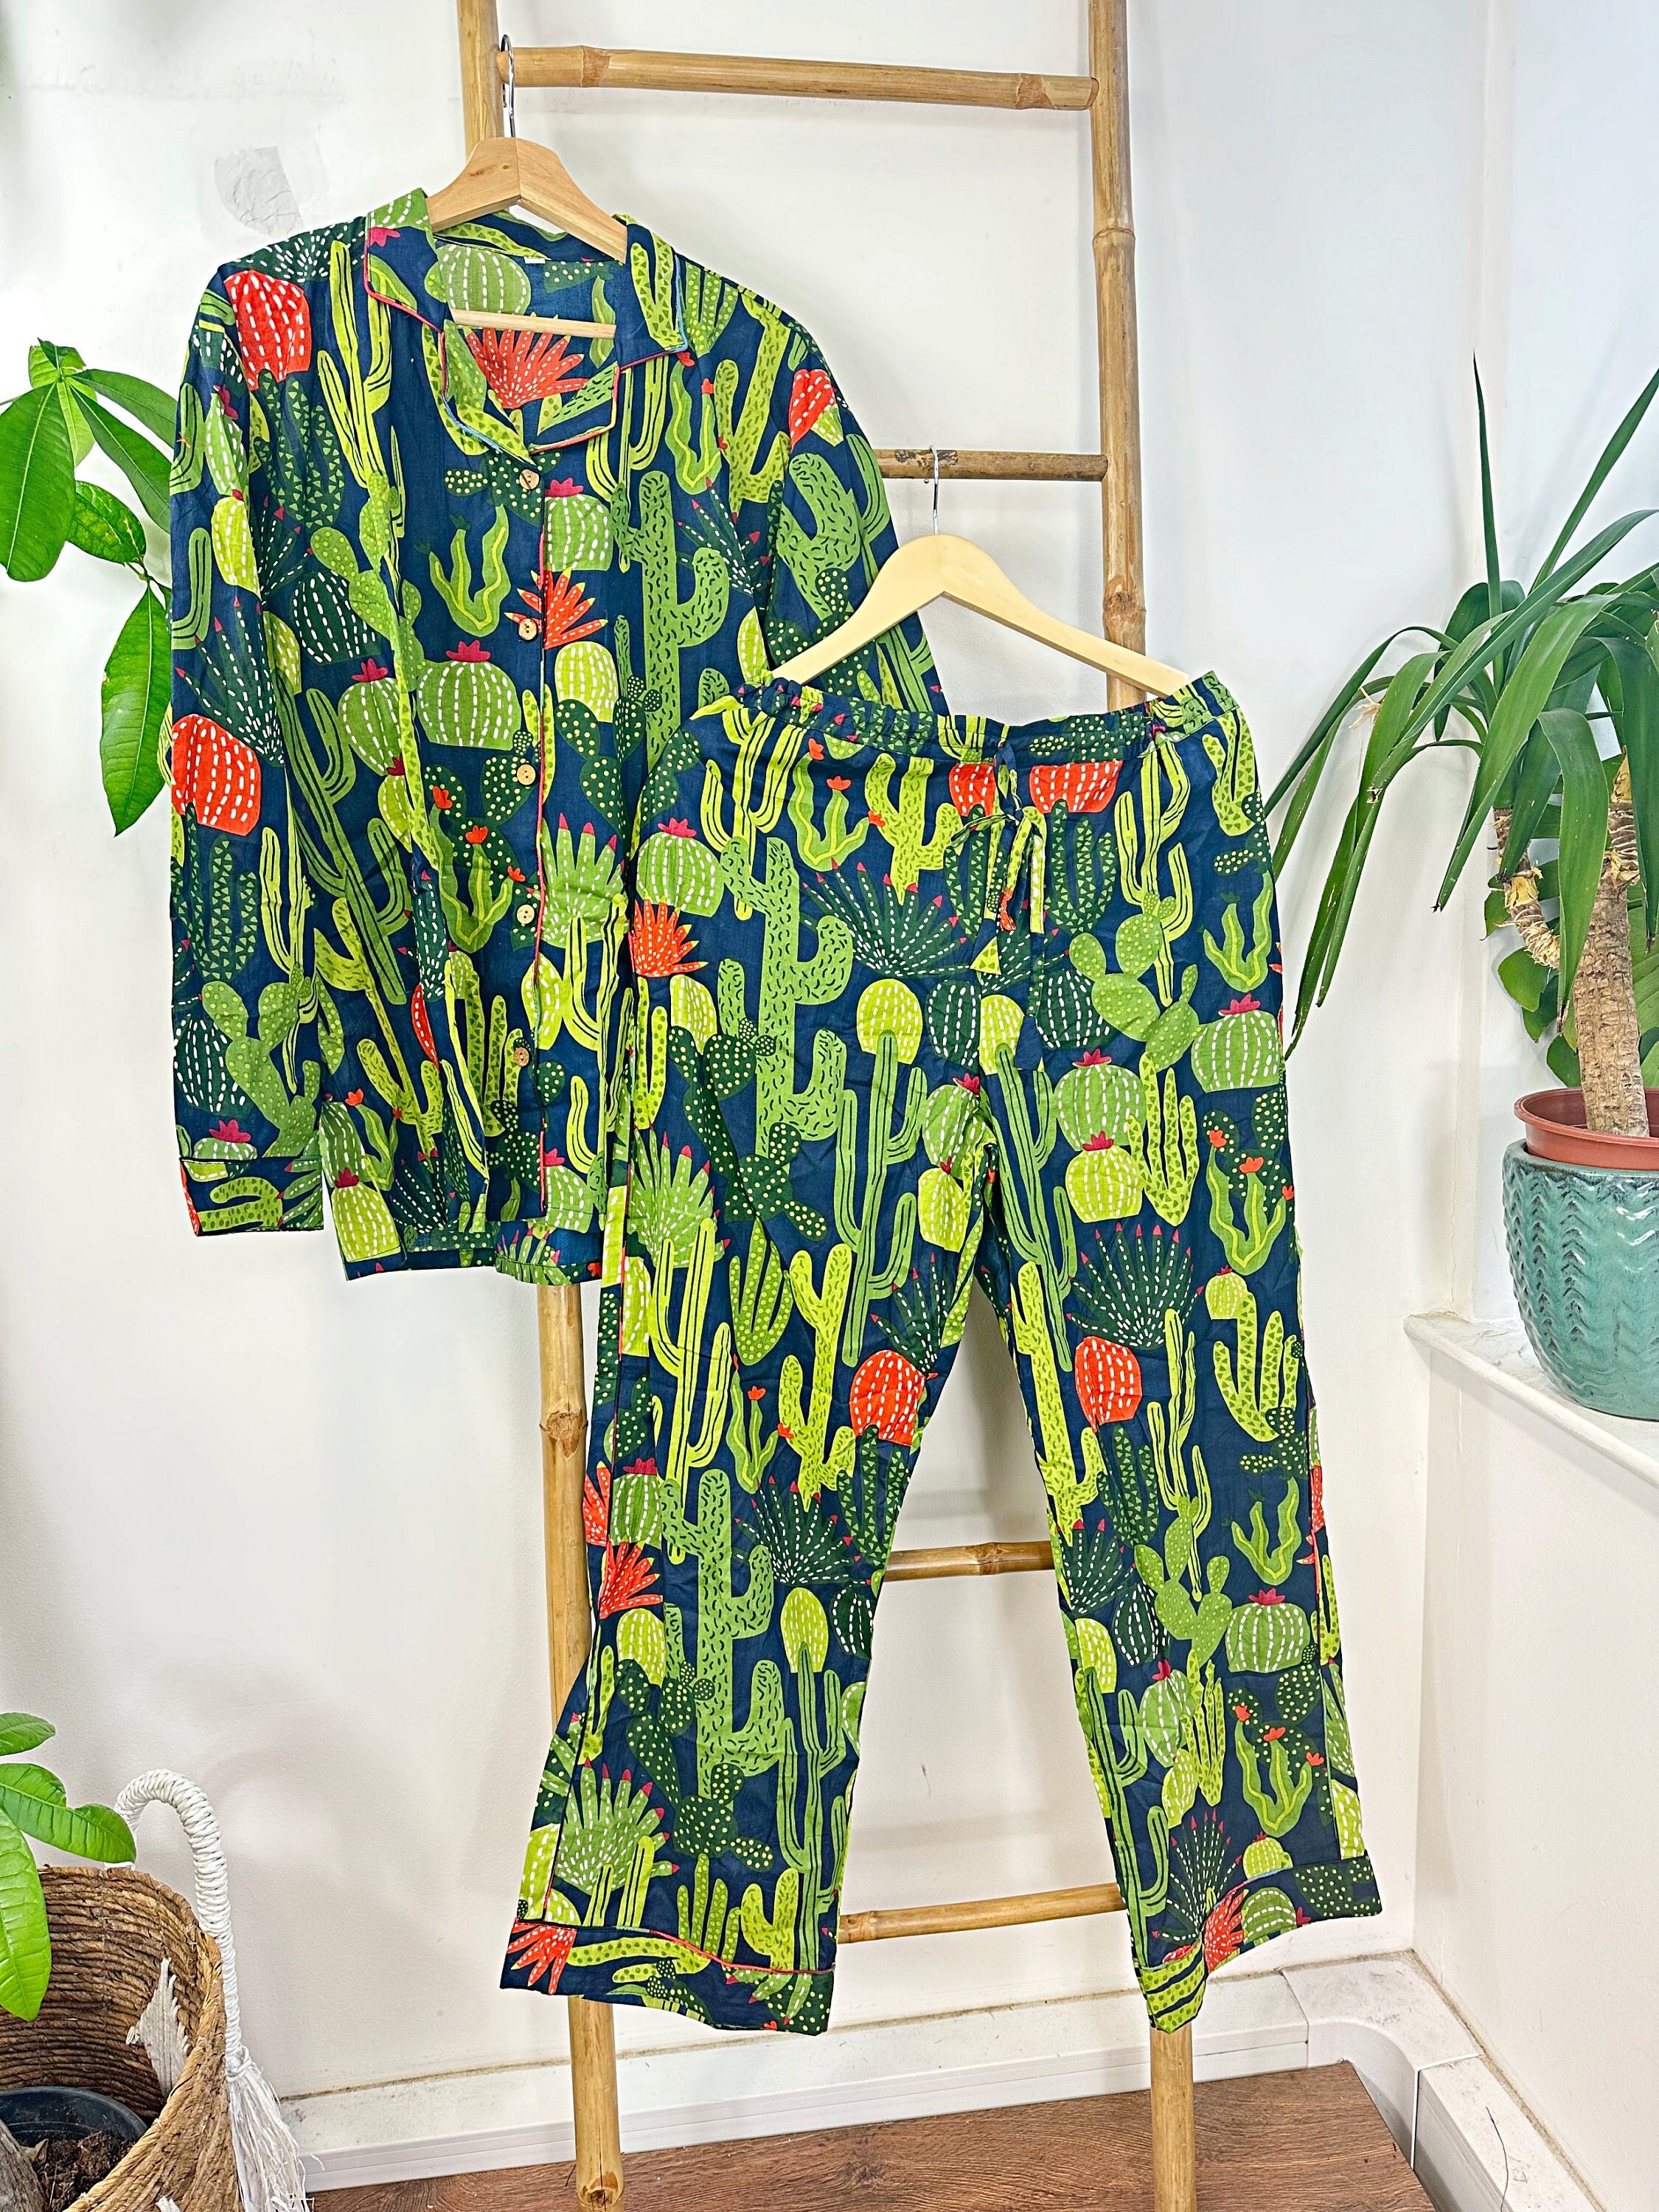 WEILEA Pajamas Set For Women，Fashion Gray Cartoon Cactus Winter